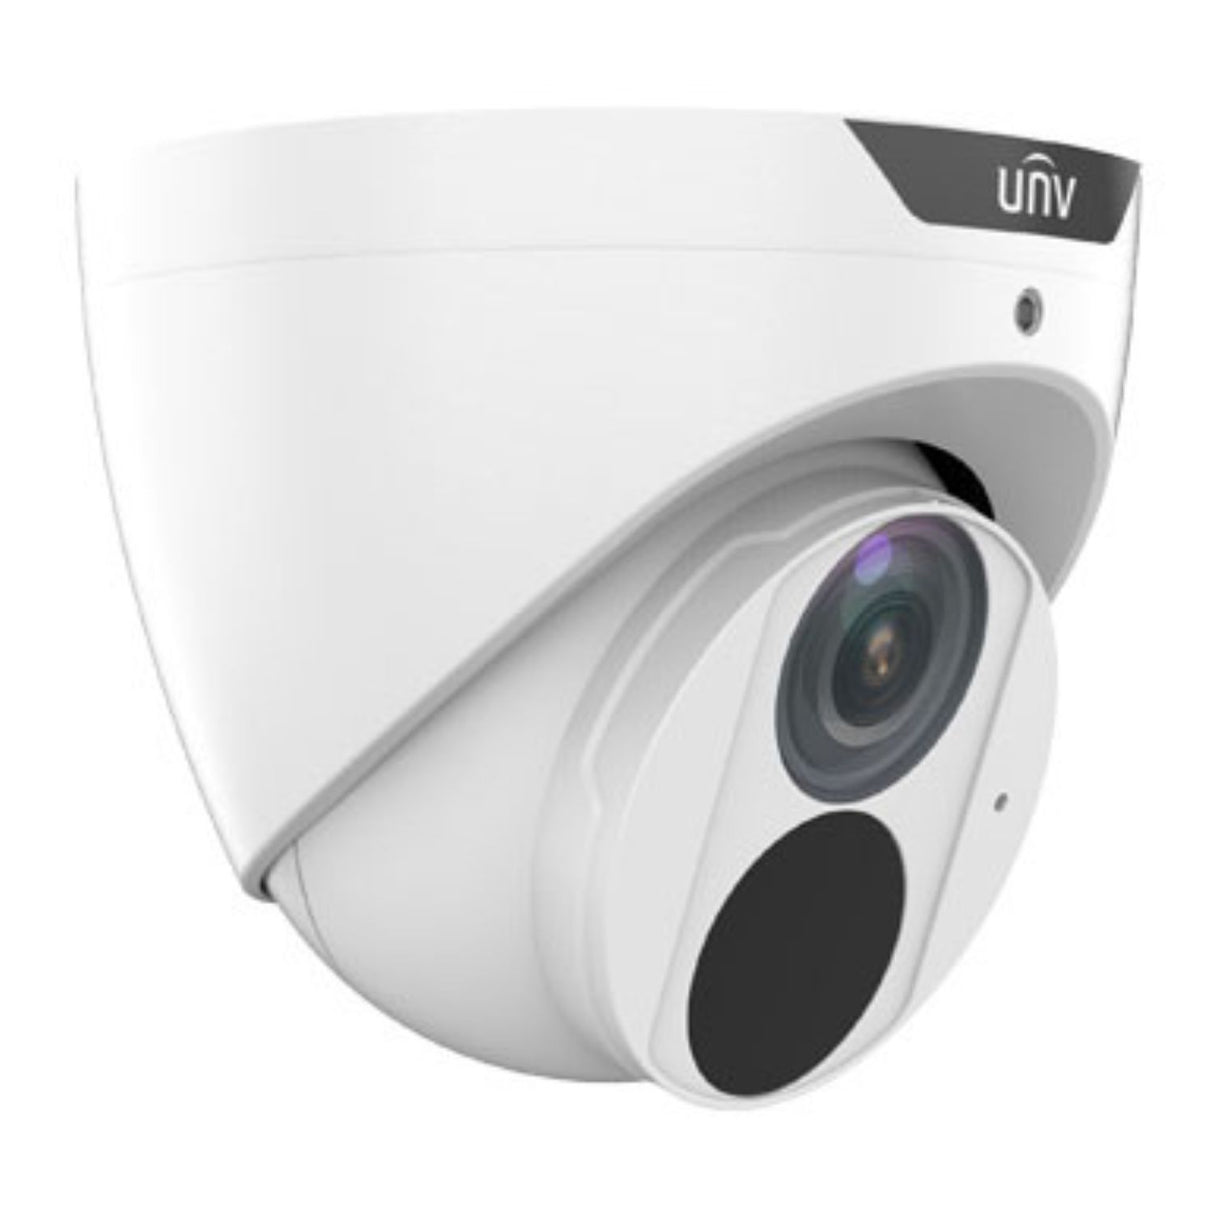 Uniview Security Camera: 6MP Turret, 2.8/4mm, Easystar - IPC3616LE-ADF28KM-G